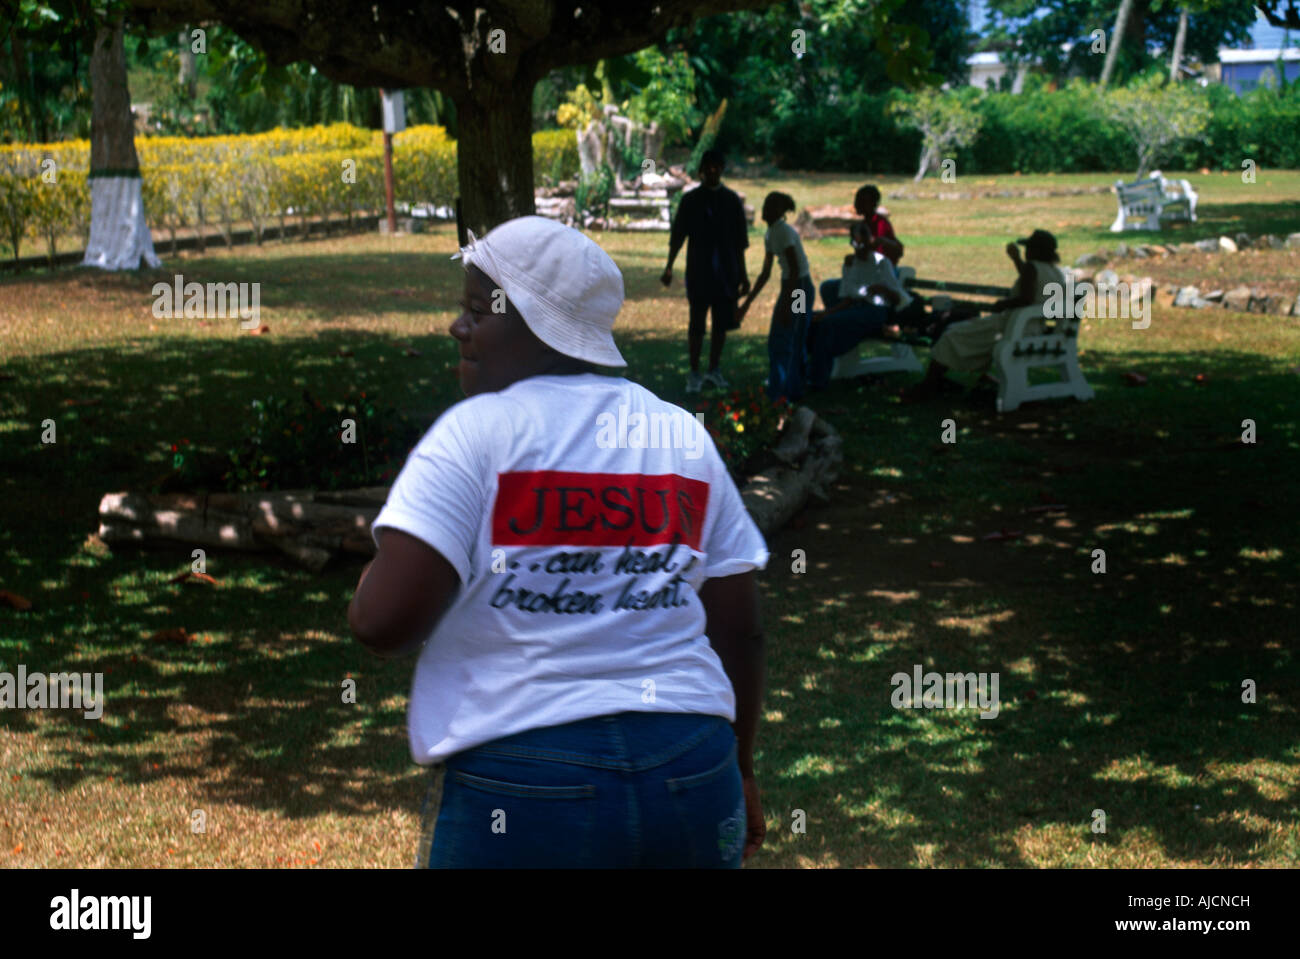 Scarborough Tobago Trinidad Botanical Gardens donna che indossa una T-shirt con lo slogan "Jesus CAN Heal a broken Heart" (Gesù può guarire un cuore spezzato) Foto Stock